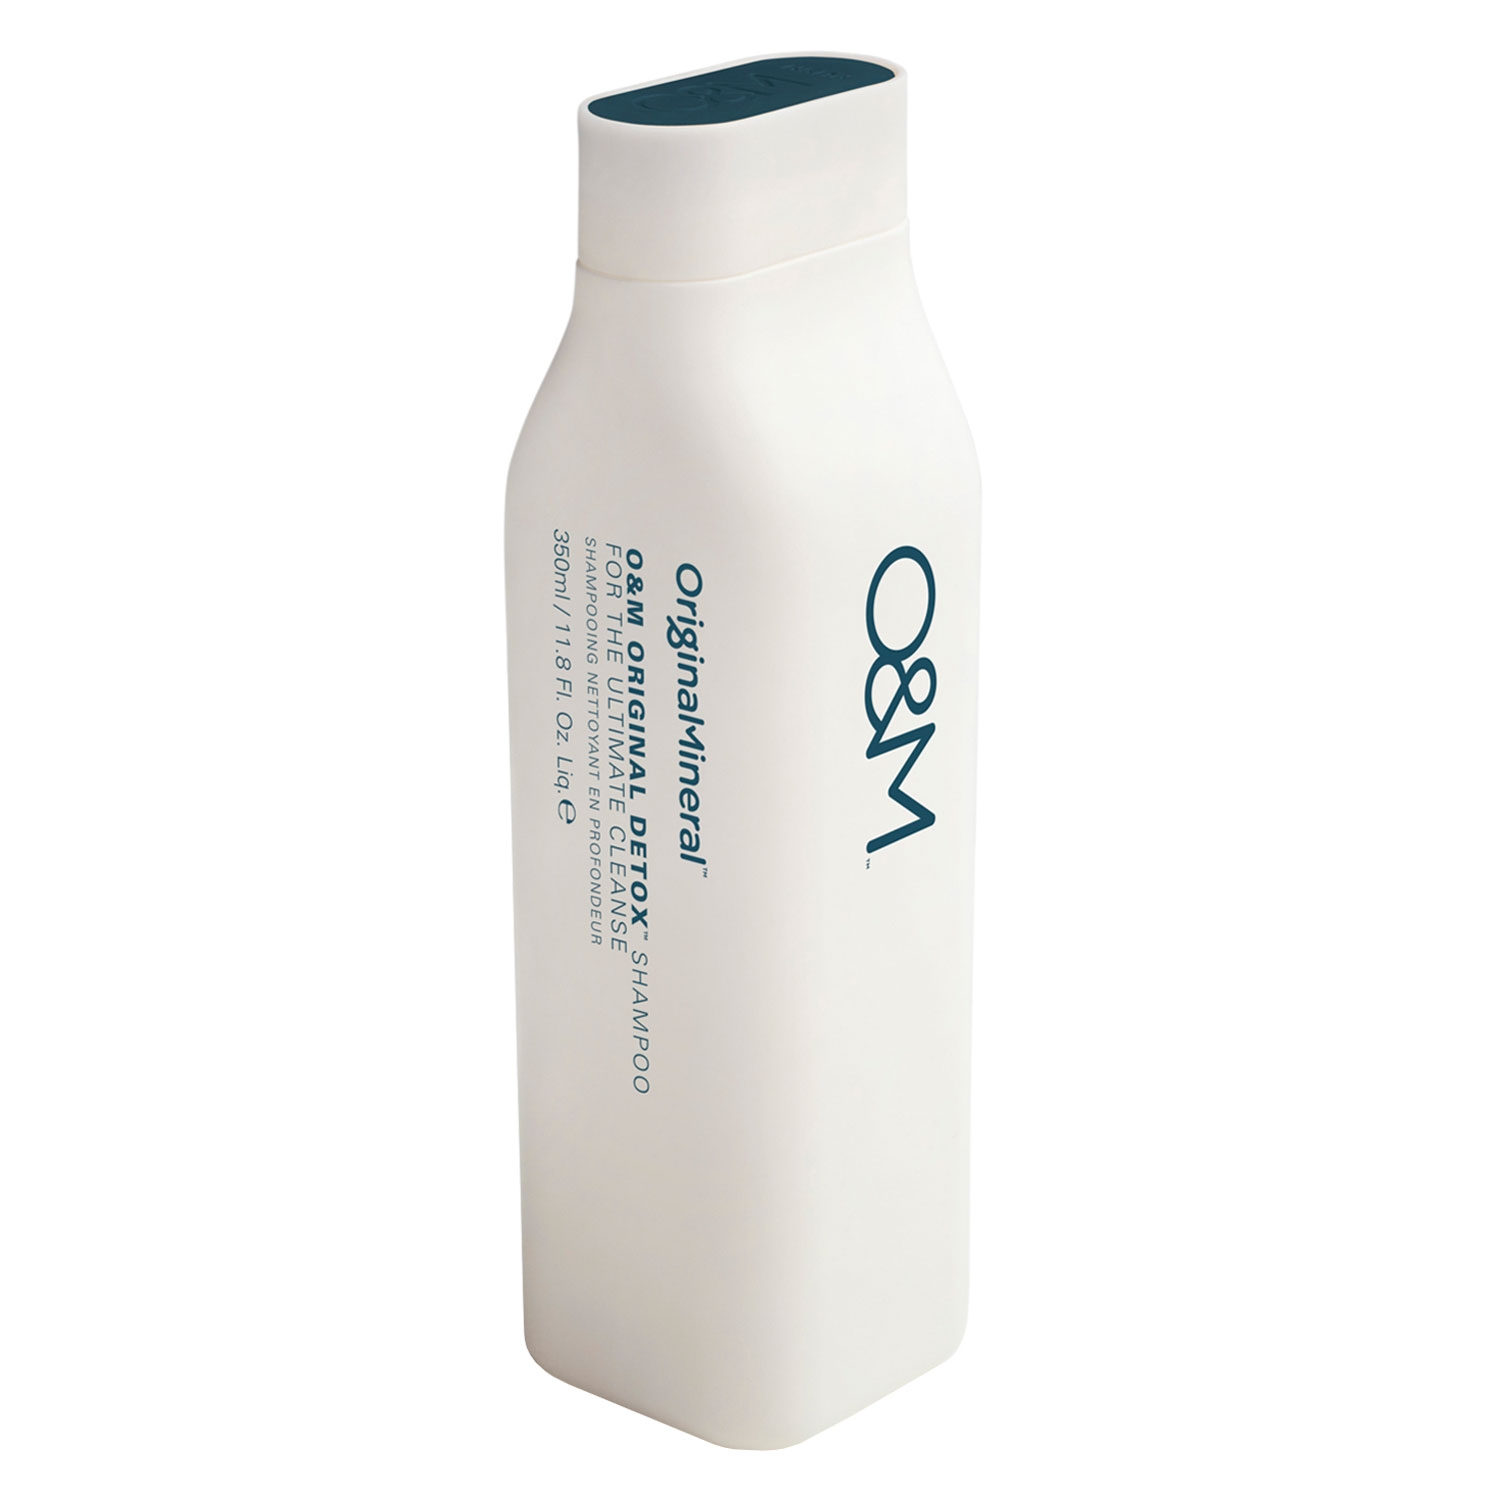 Produktbild von O&M Haircare - Original Detox Cleanse Shampoo